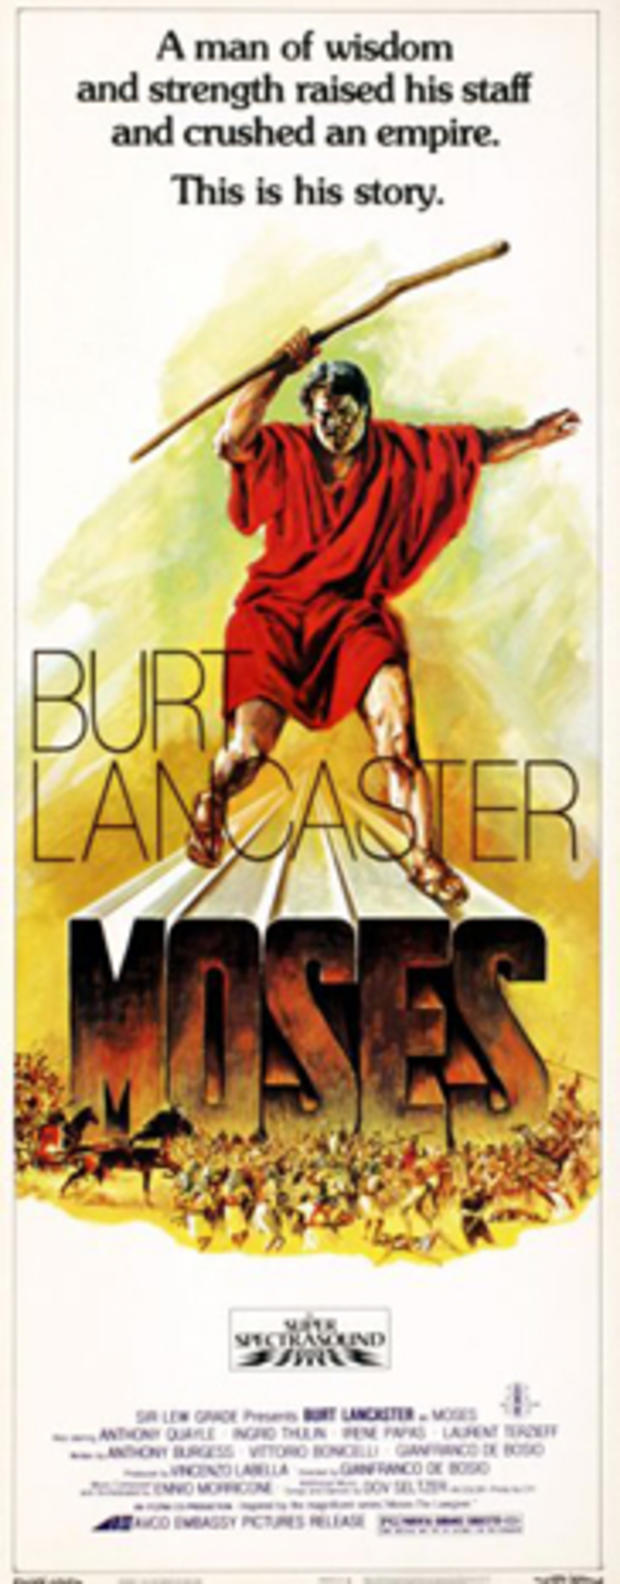 Bible_moses_poster.jpg 